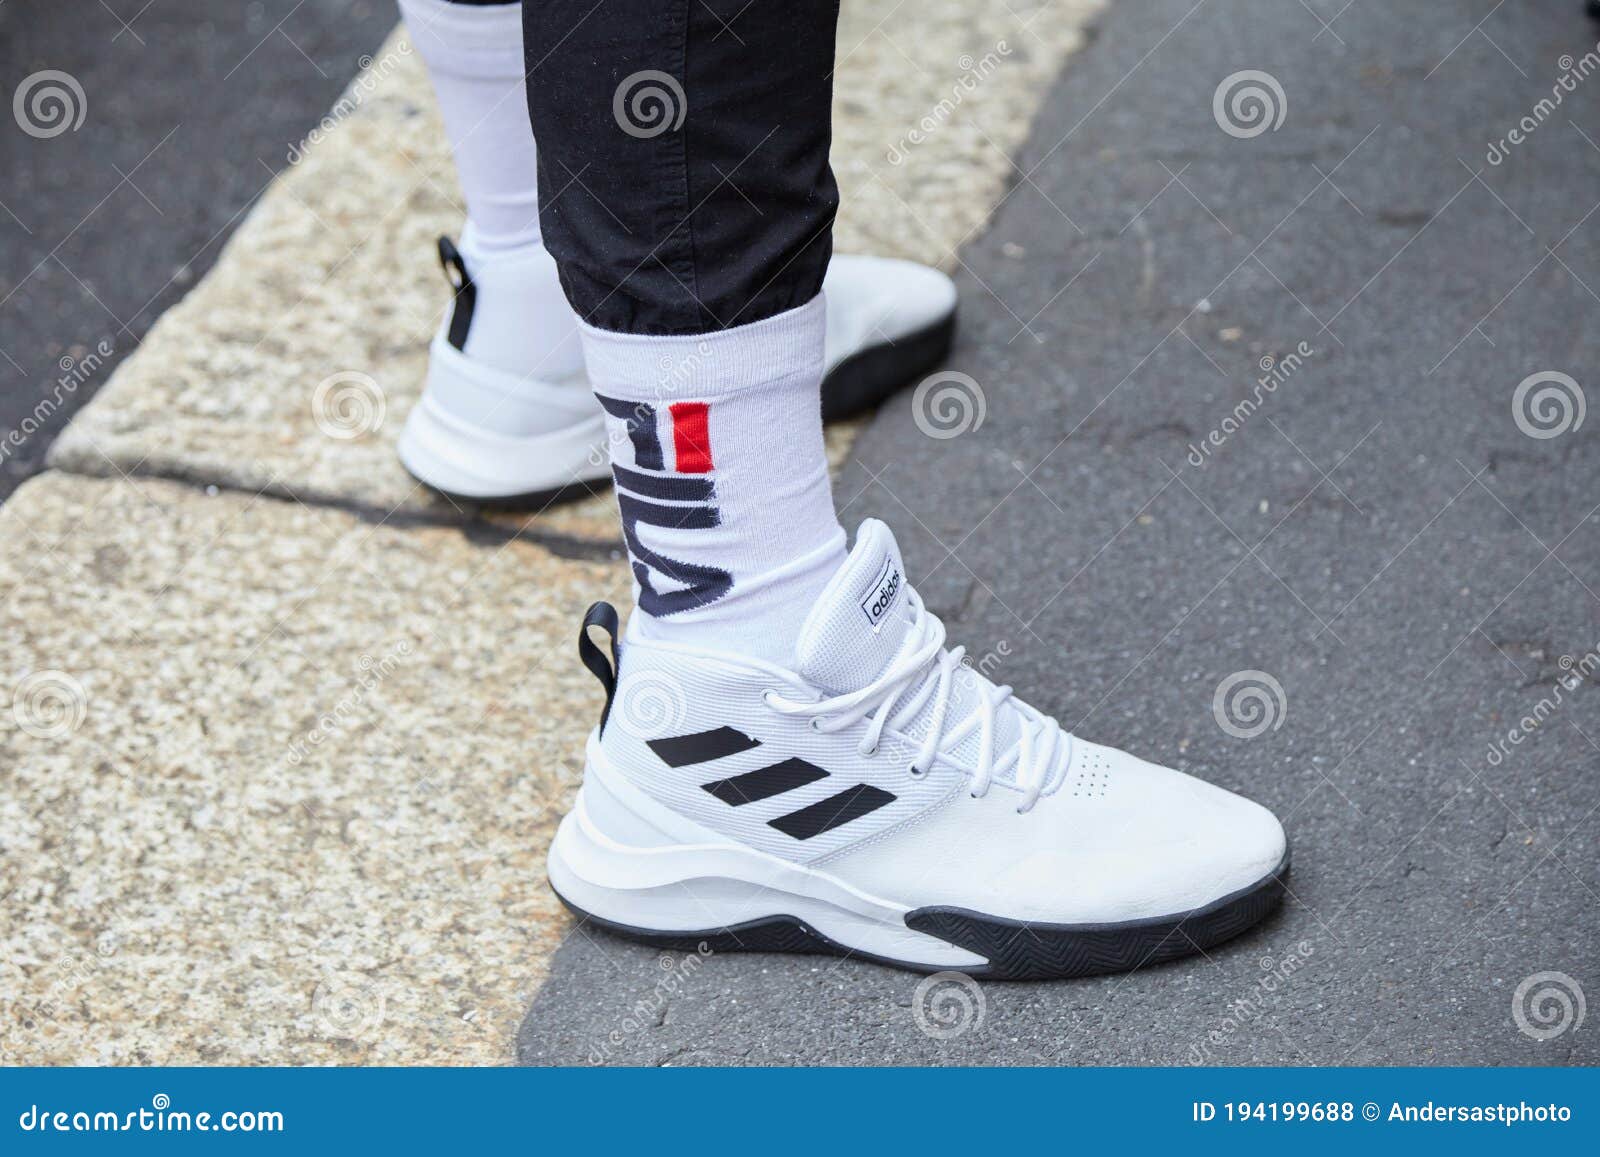 black socks white sneakers